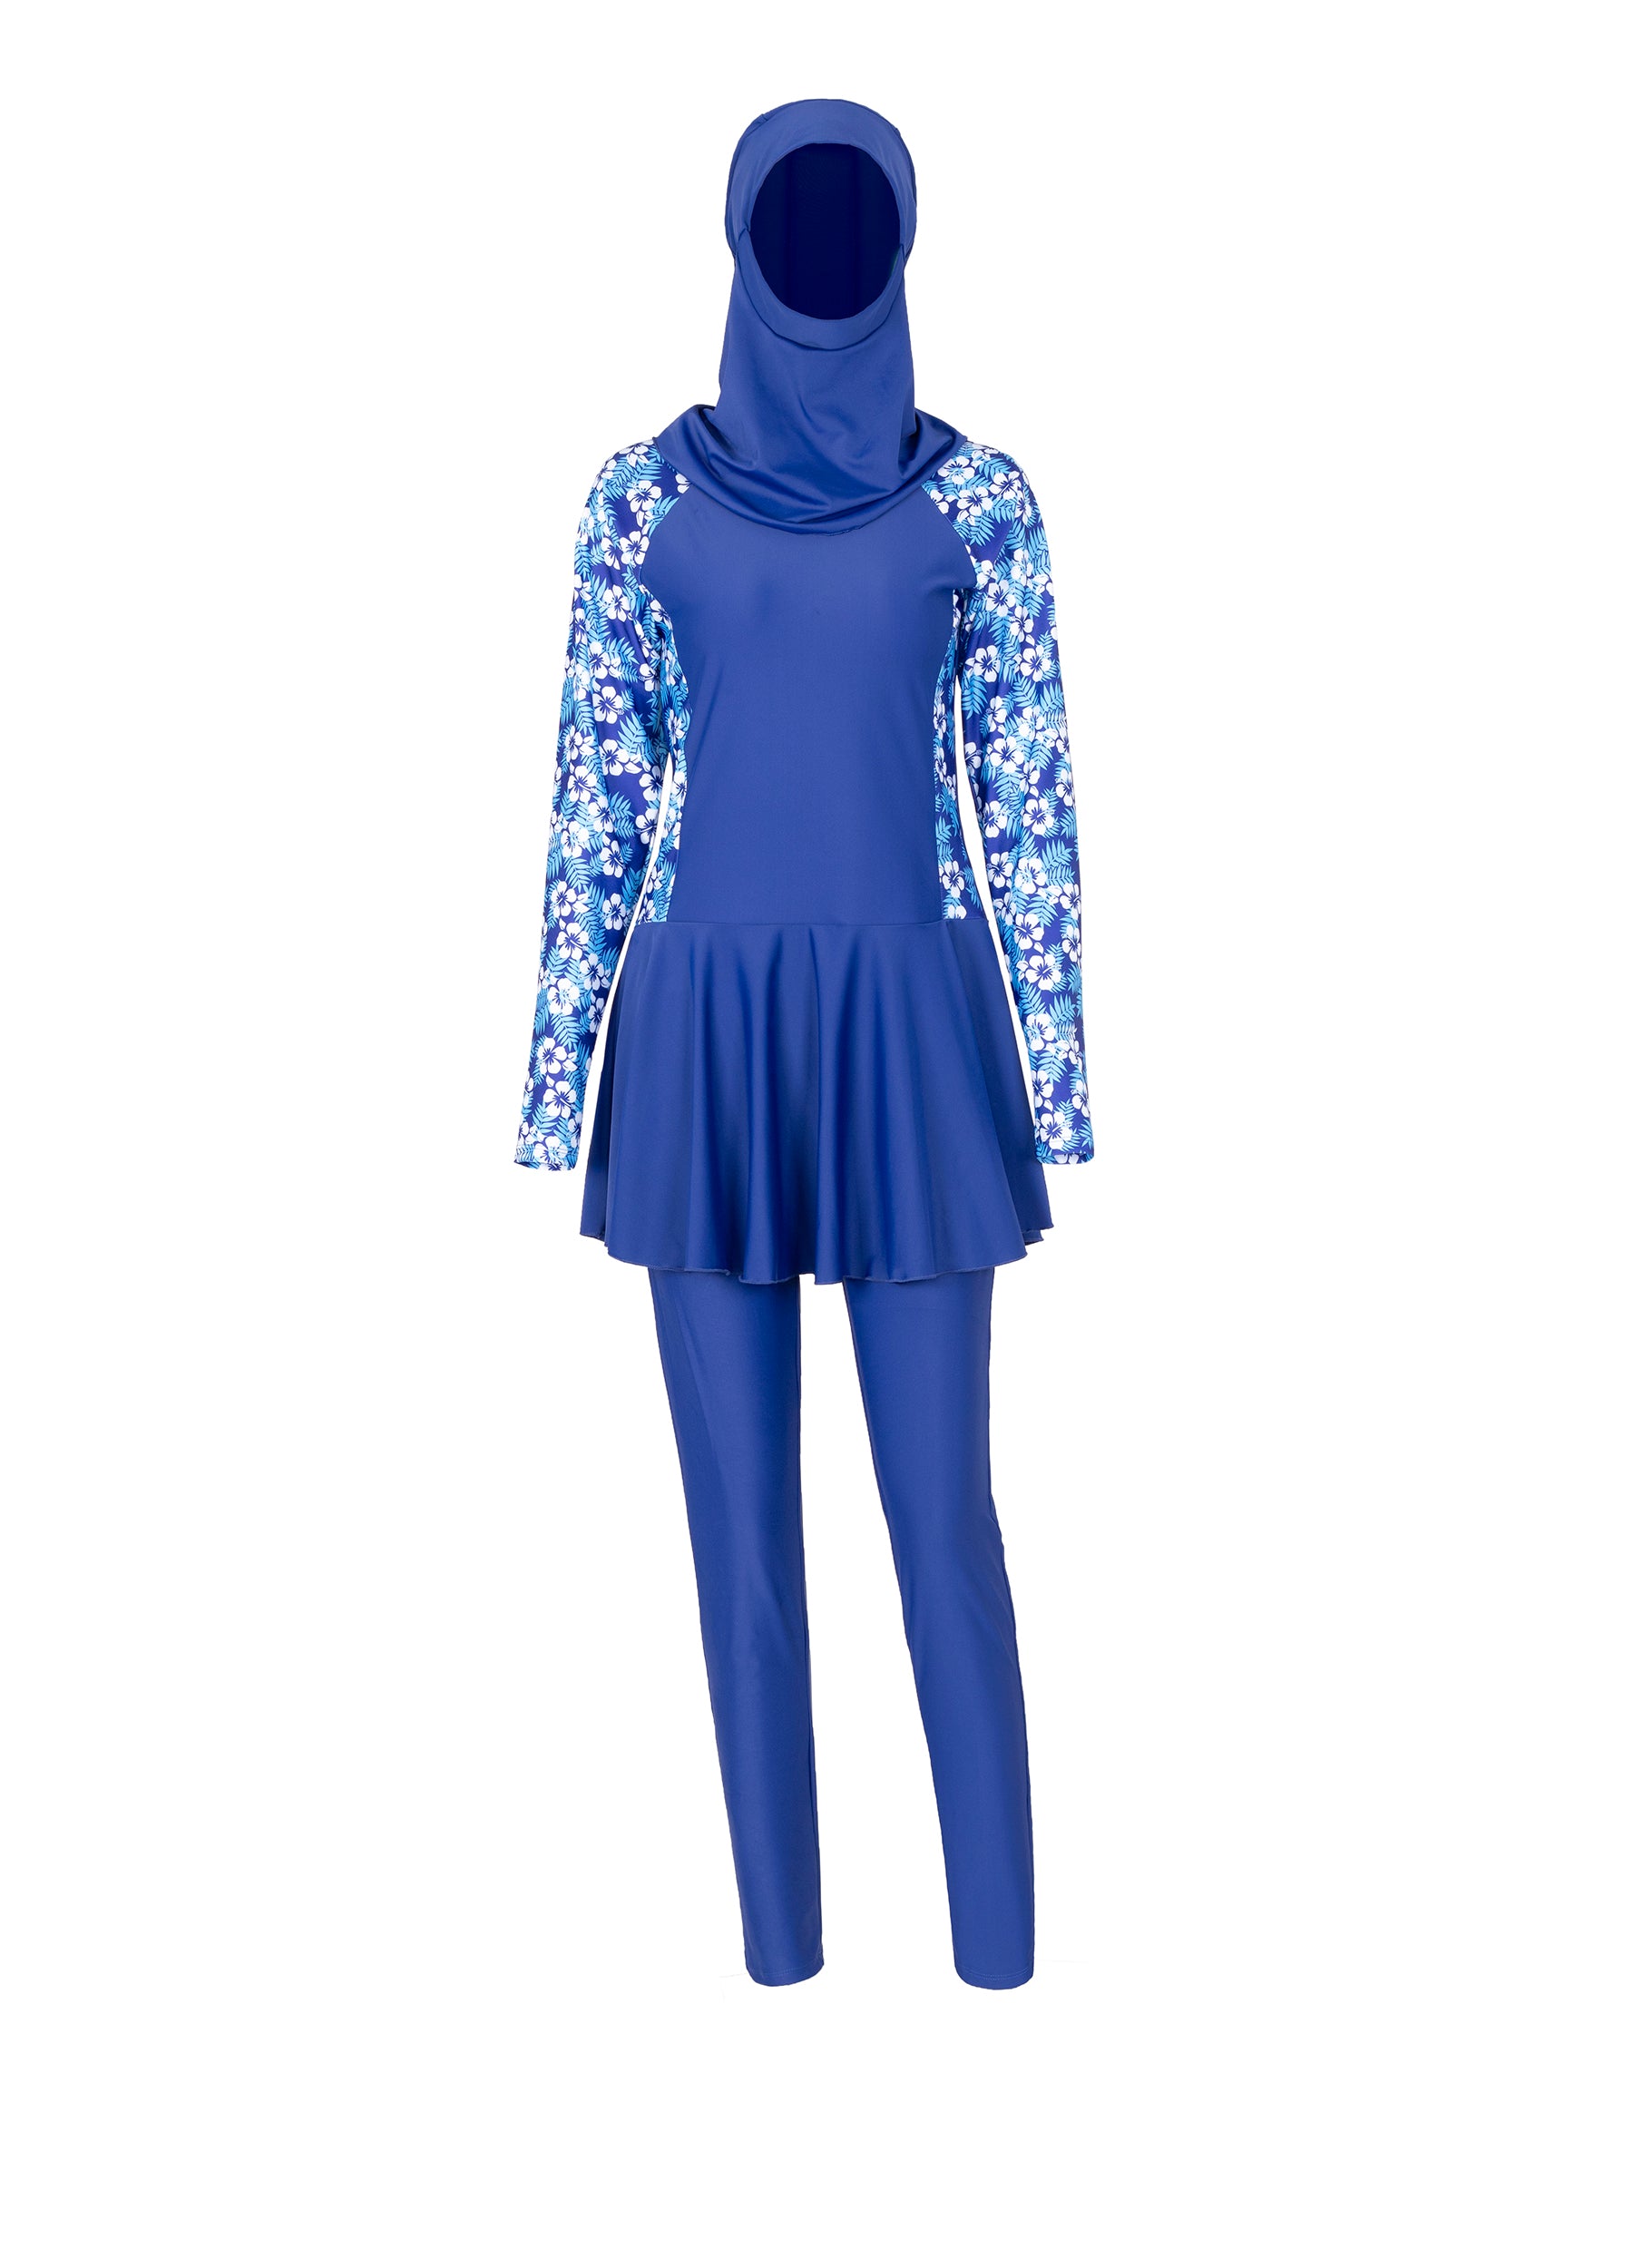 muslim swimming suits/islamic swimming suits/4POSE Women's Tropical Print Peplum Hem Full Coverage Swimsuit-Blue base match print pattern main view